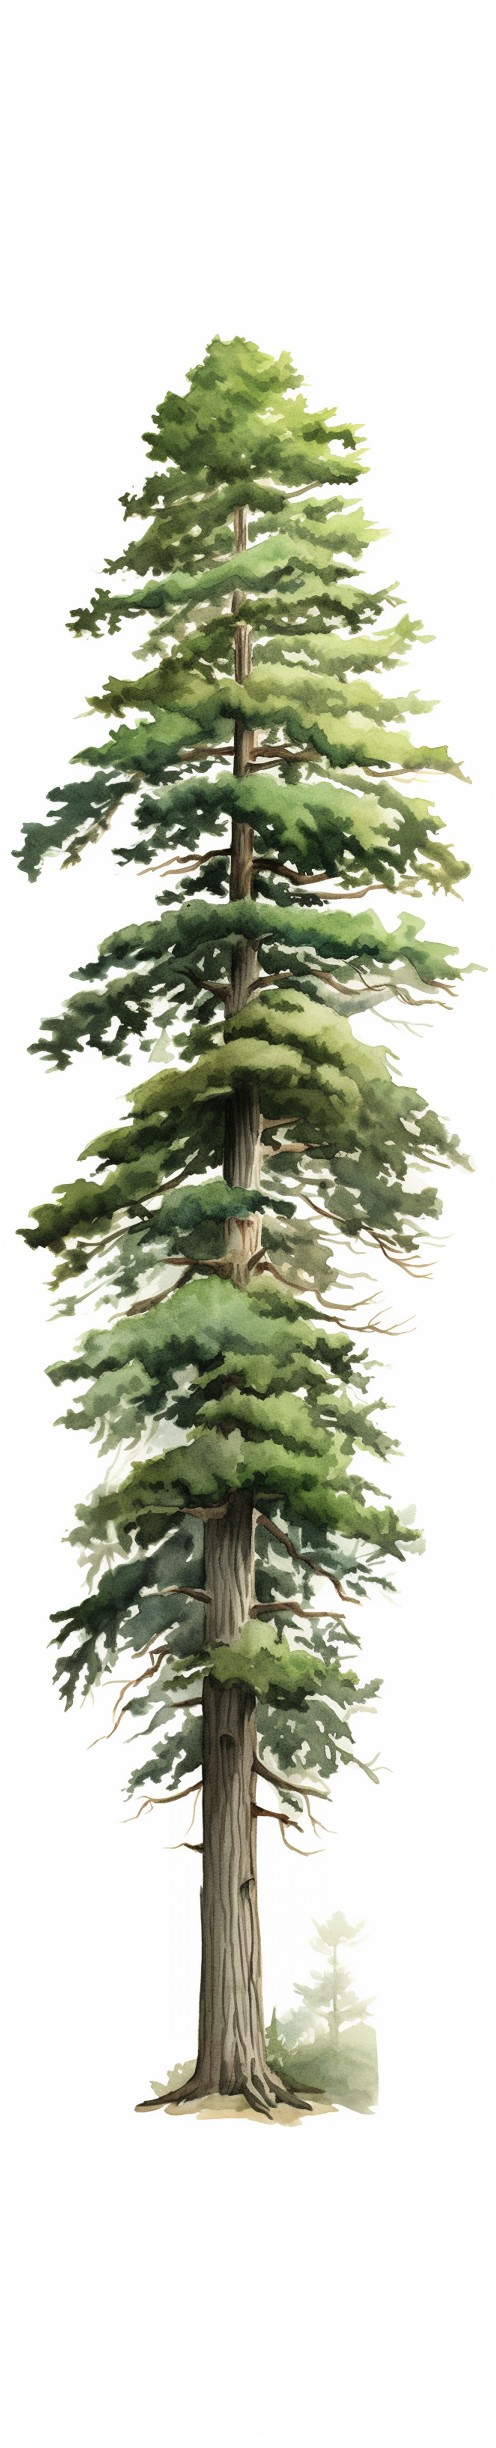 redwood - coniferous tree